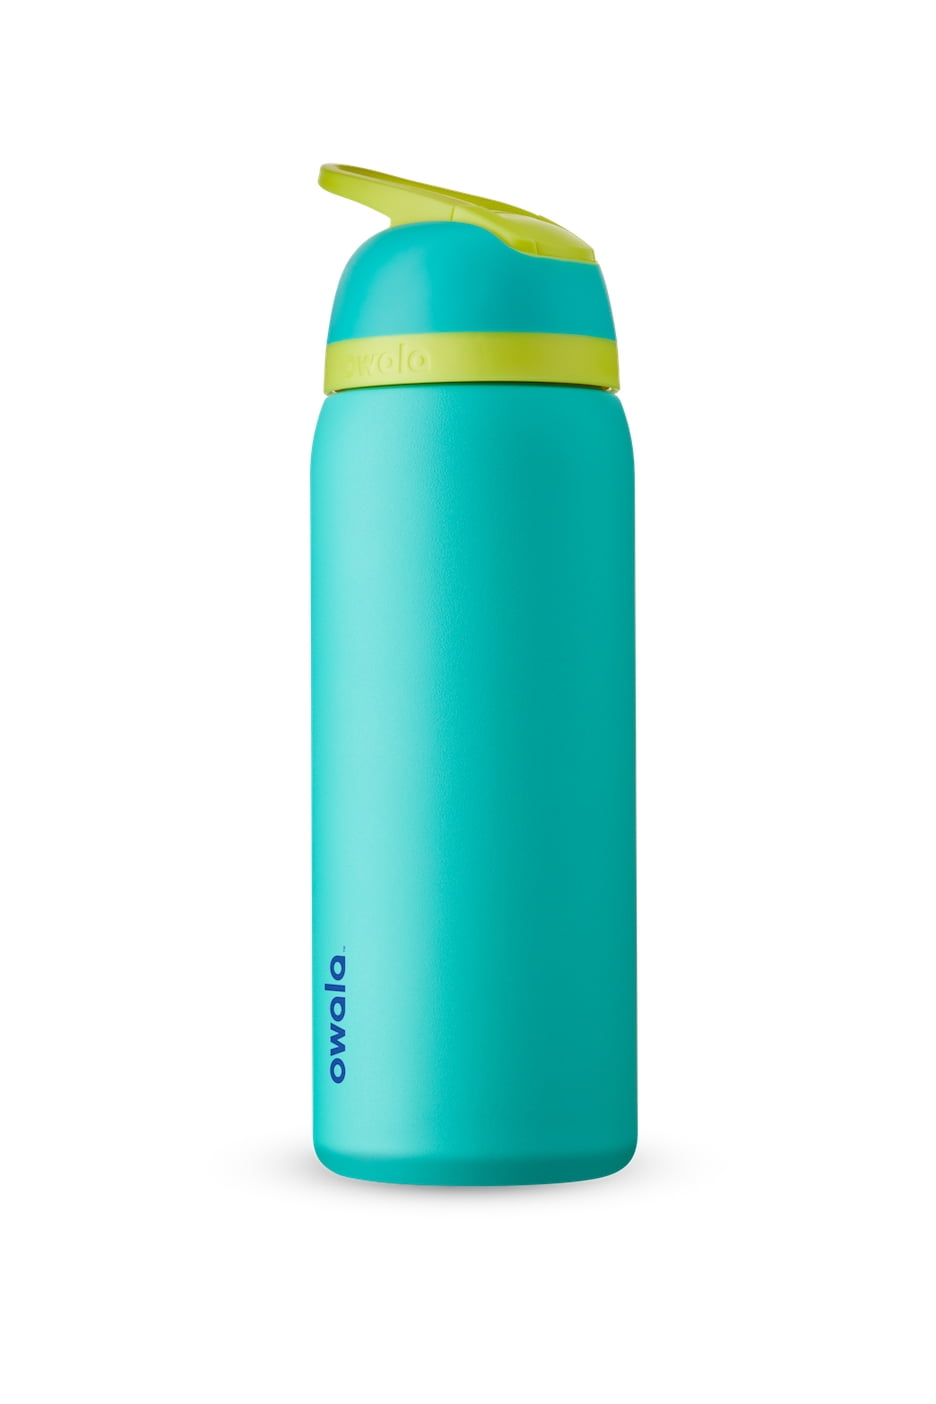 Owala Flip 32 oz. Vacuum Insulated Stainless Steel Water Bottle - Teal 